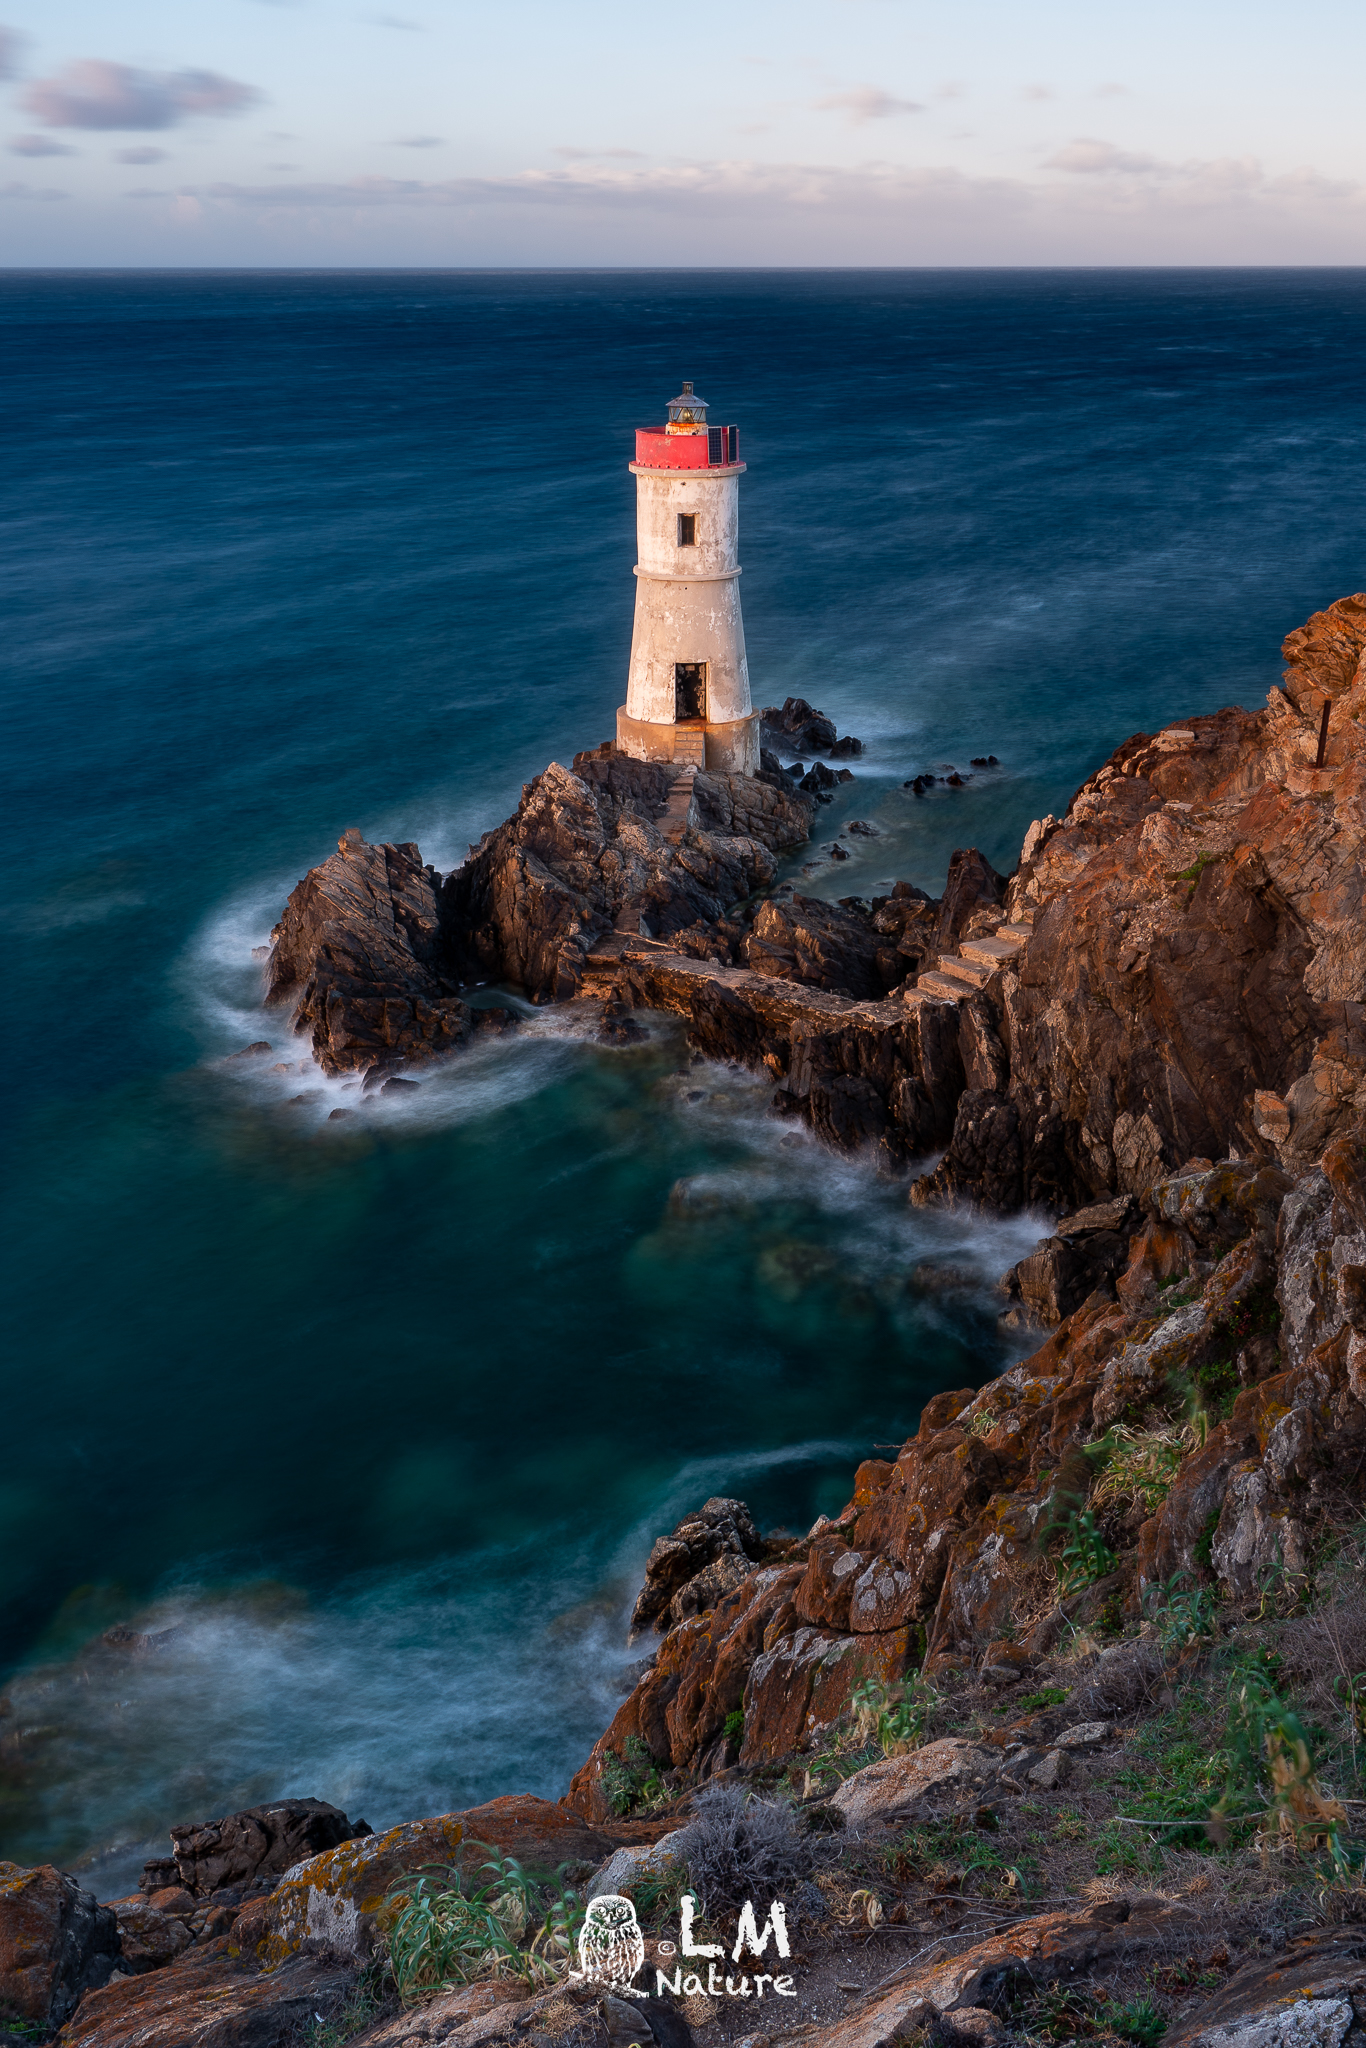 Old Lighthouse of Capo Ferro...